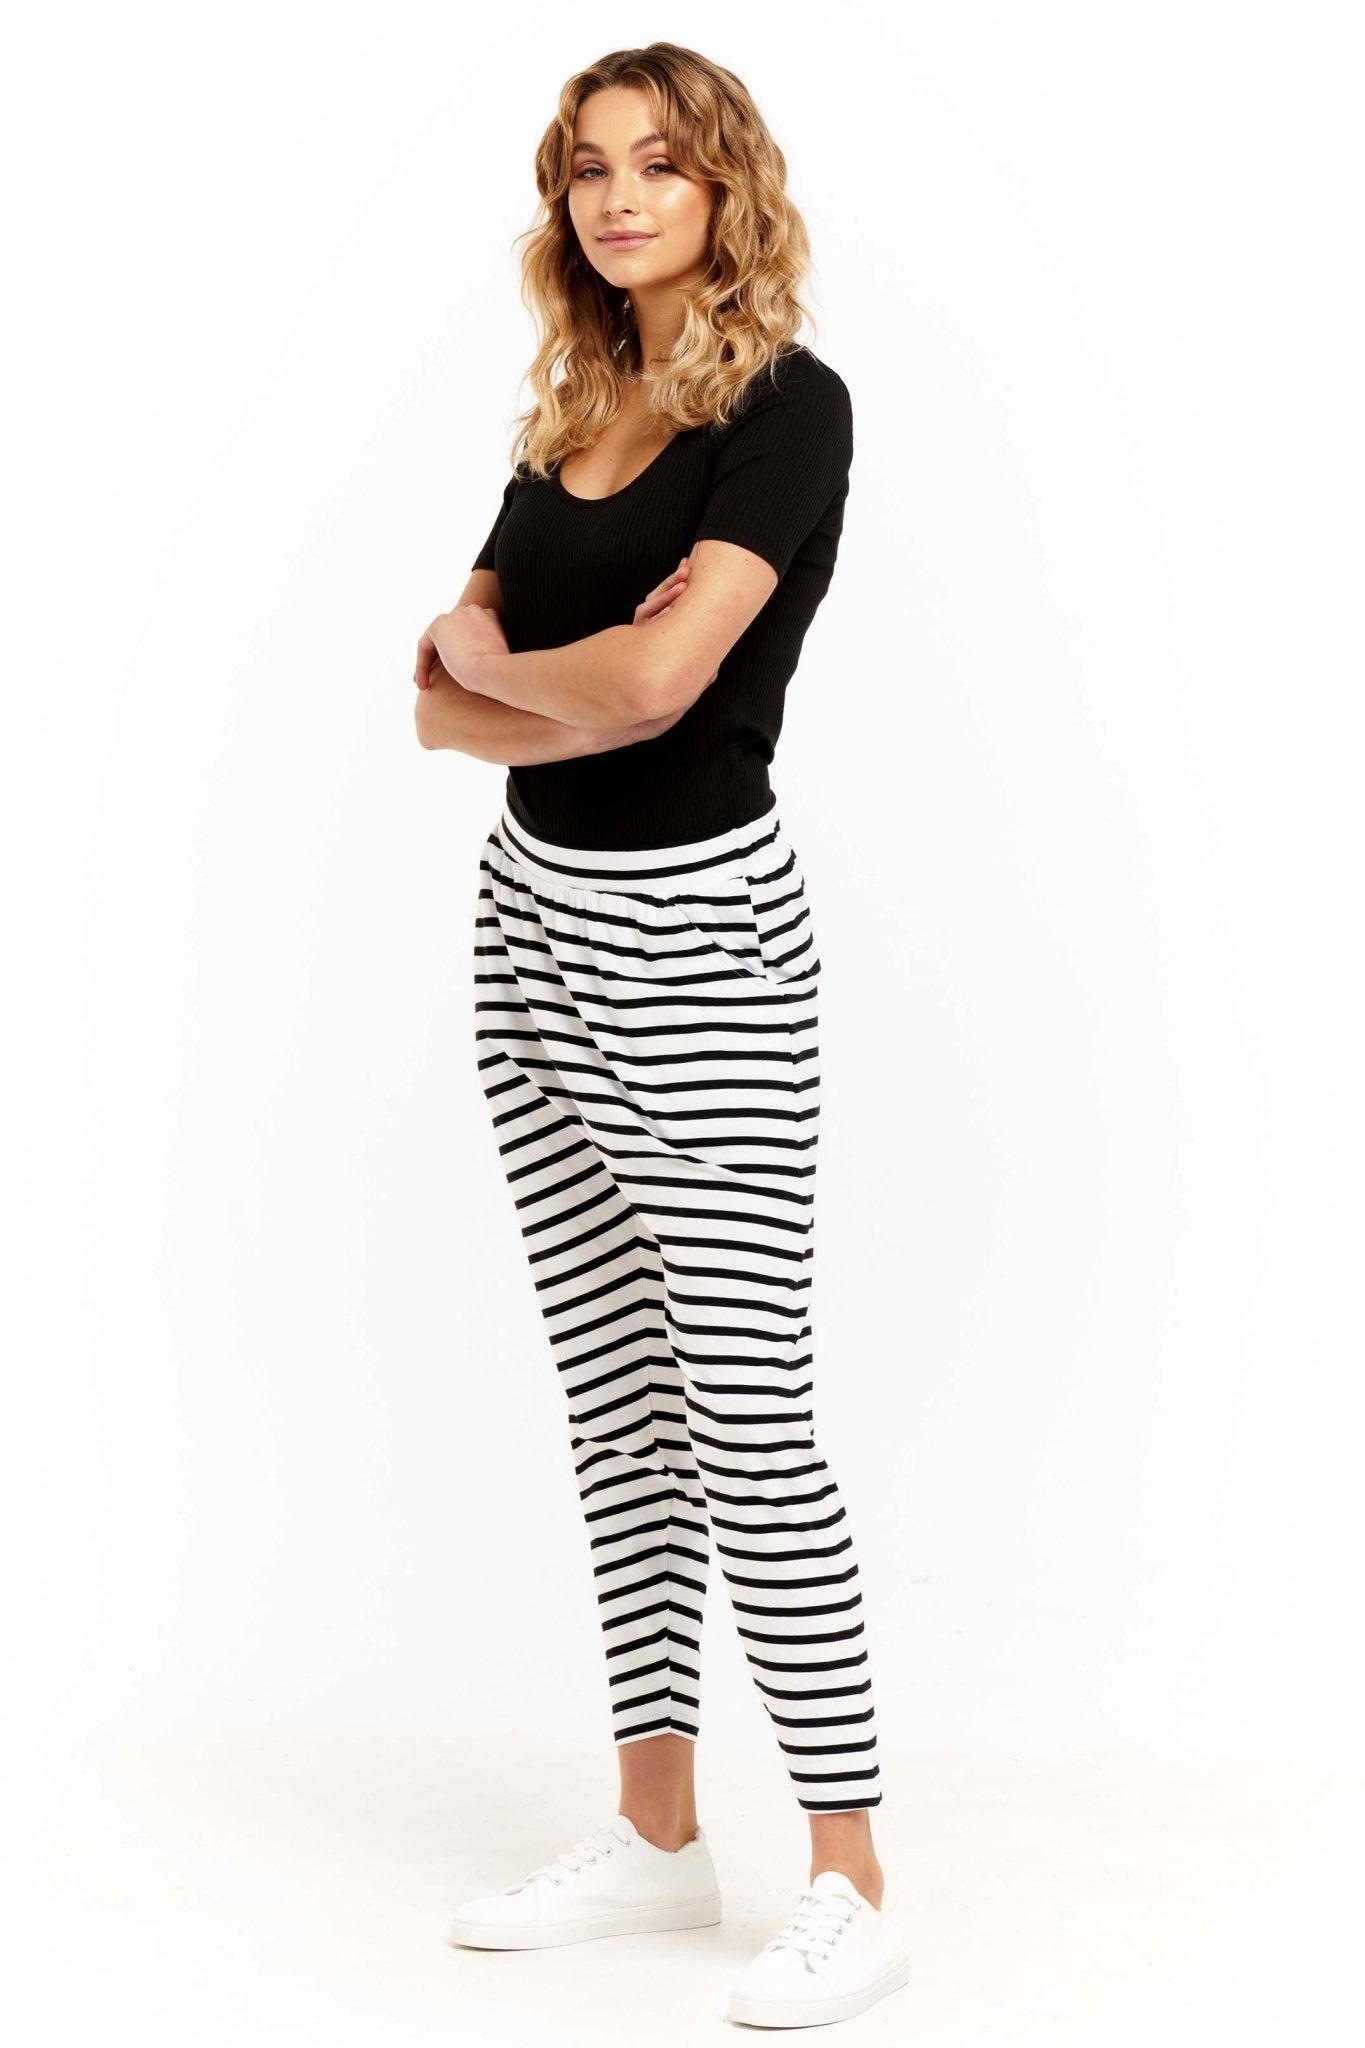 Betty Basics Lola Pant in White with Black Stripe - Hey Sara